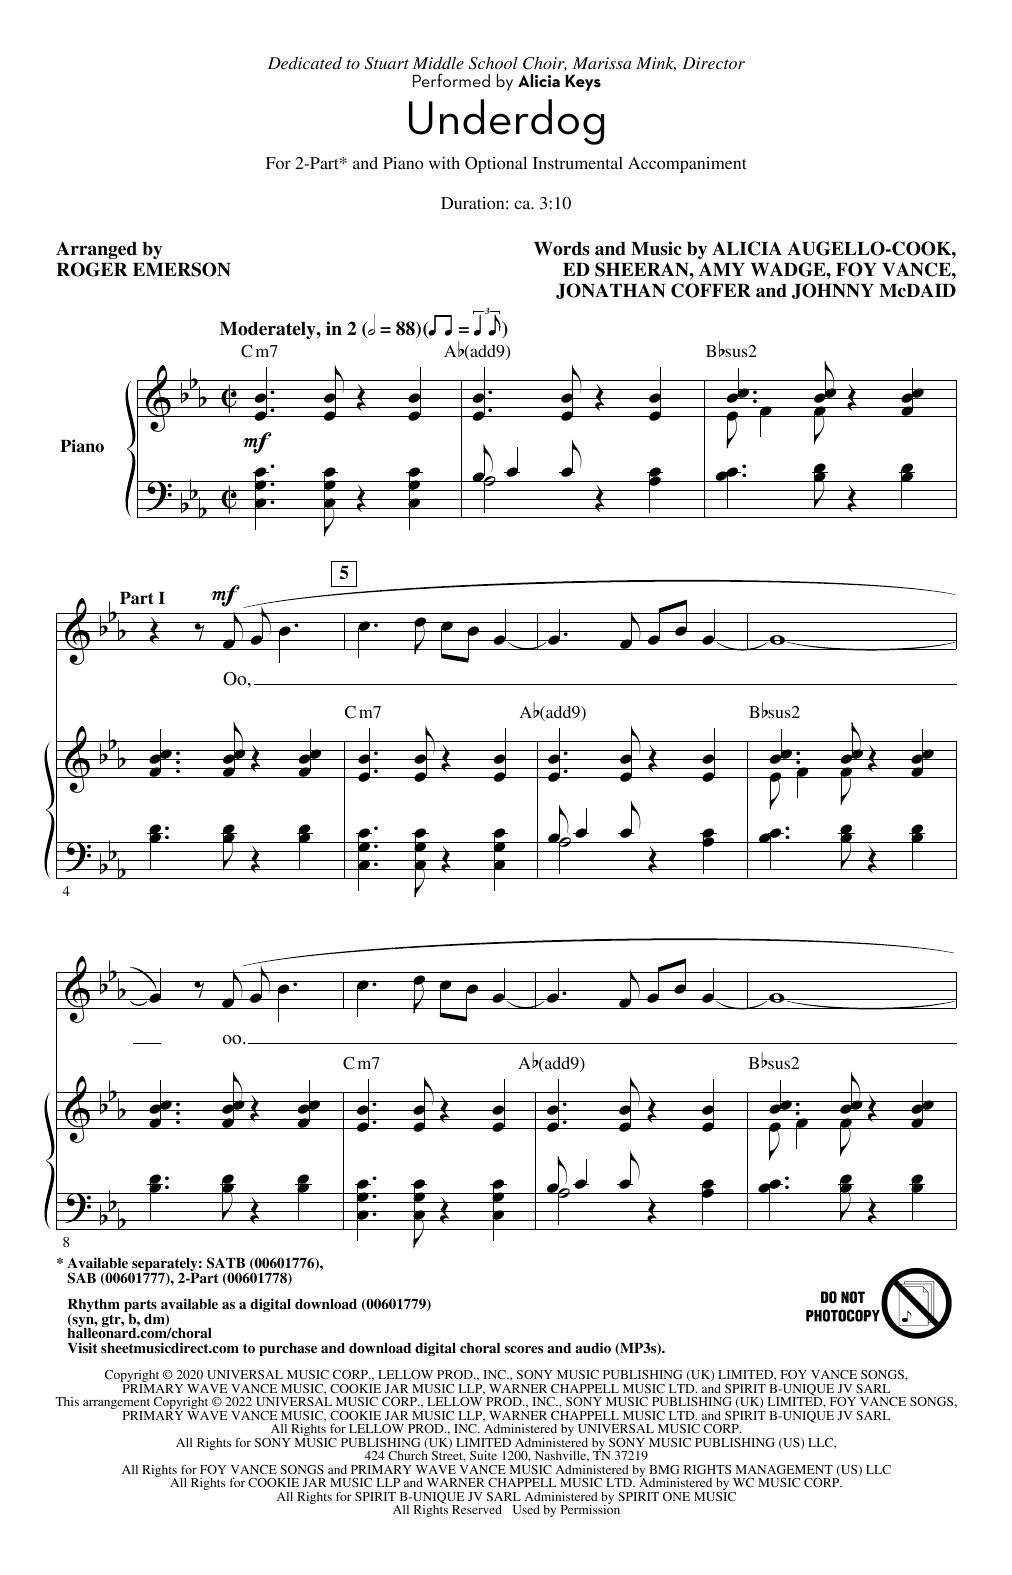 Alicia Keys Underdog (arr. Roger Emerson) Sheet Music Notes & Chords for SATB Choir - Download or Print PDF